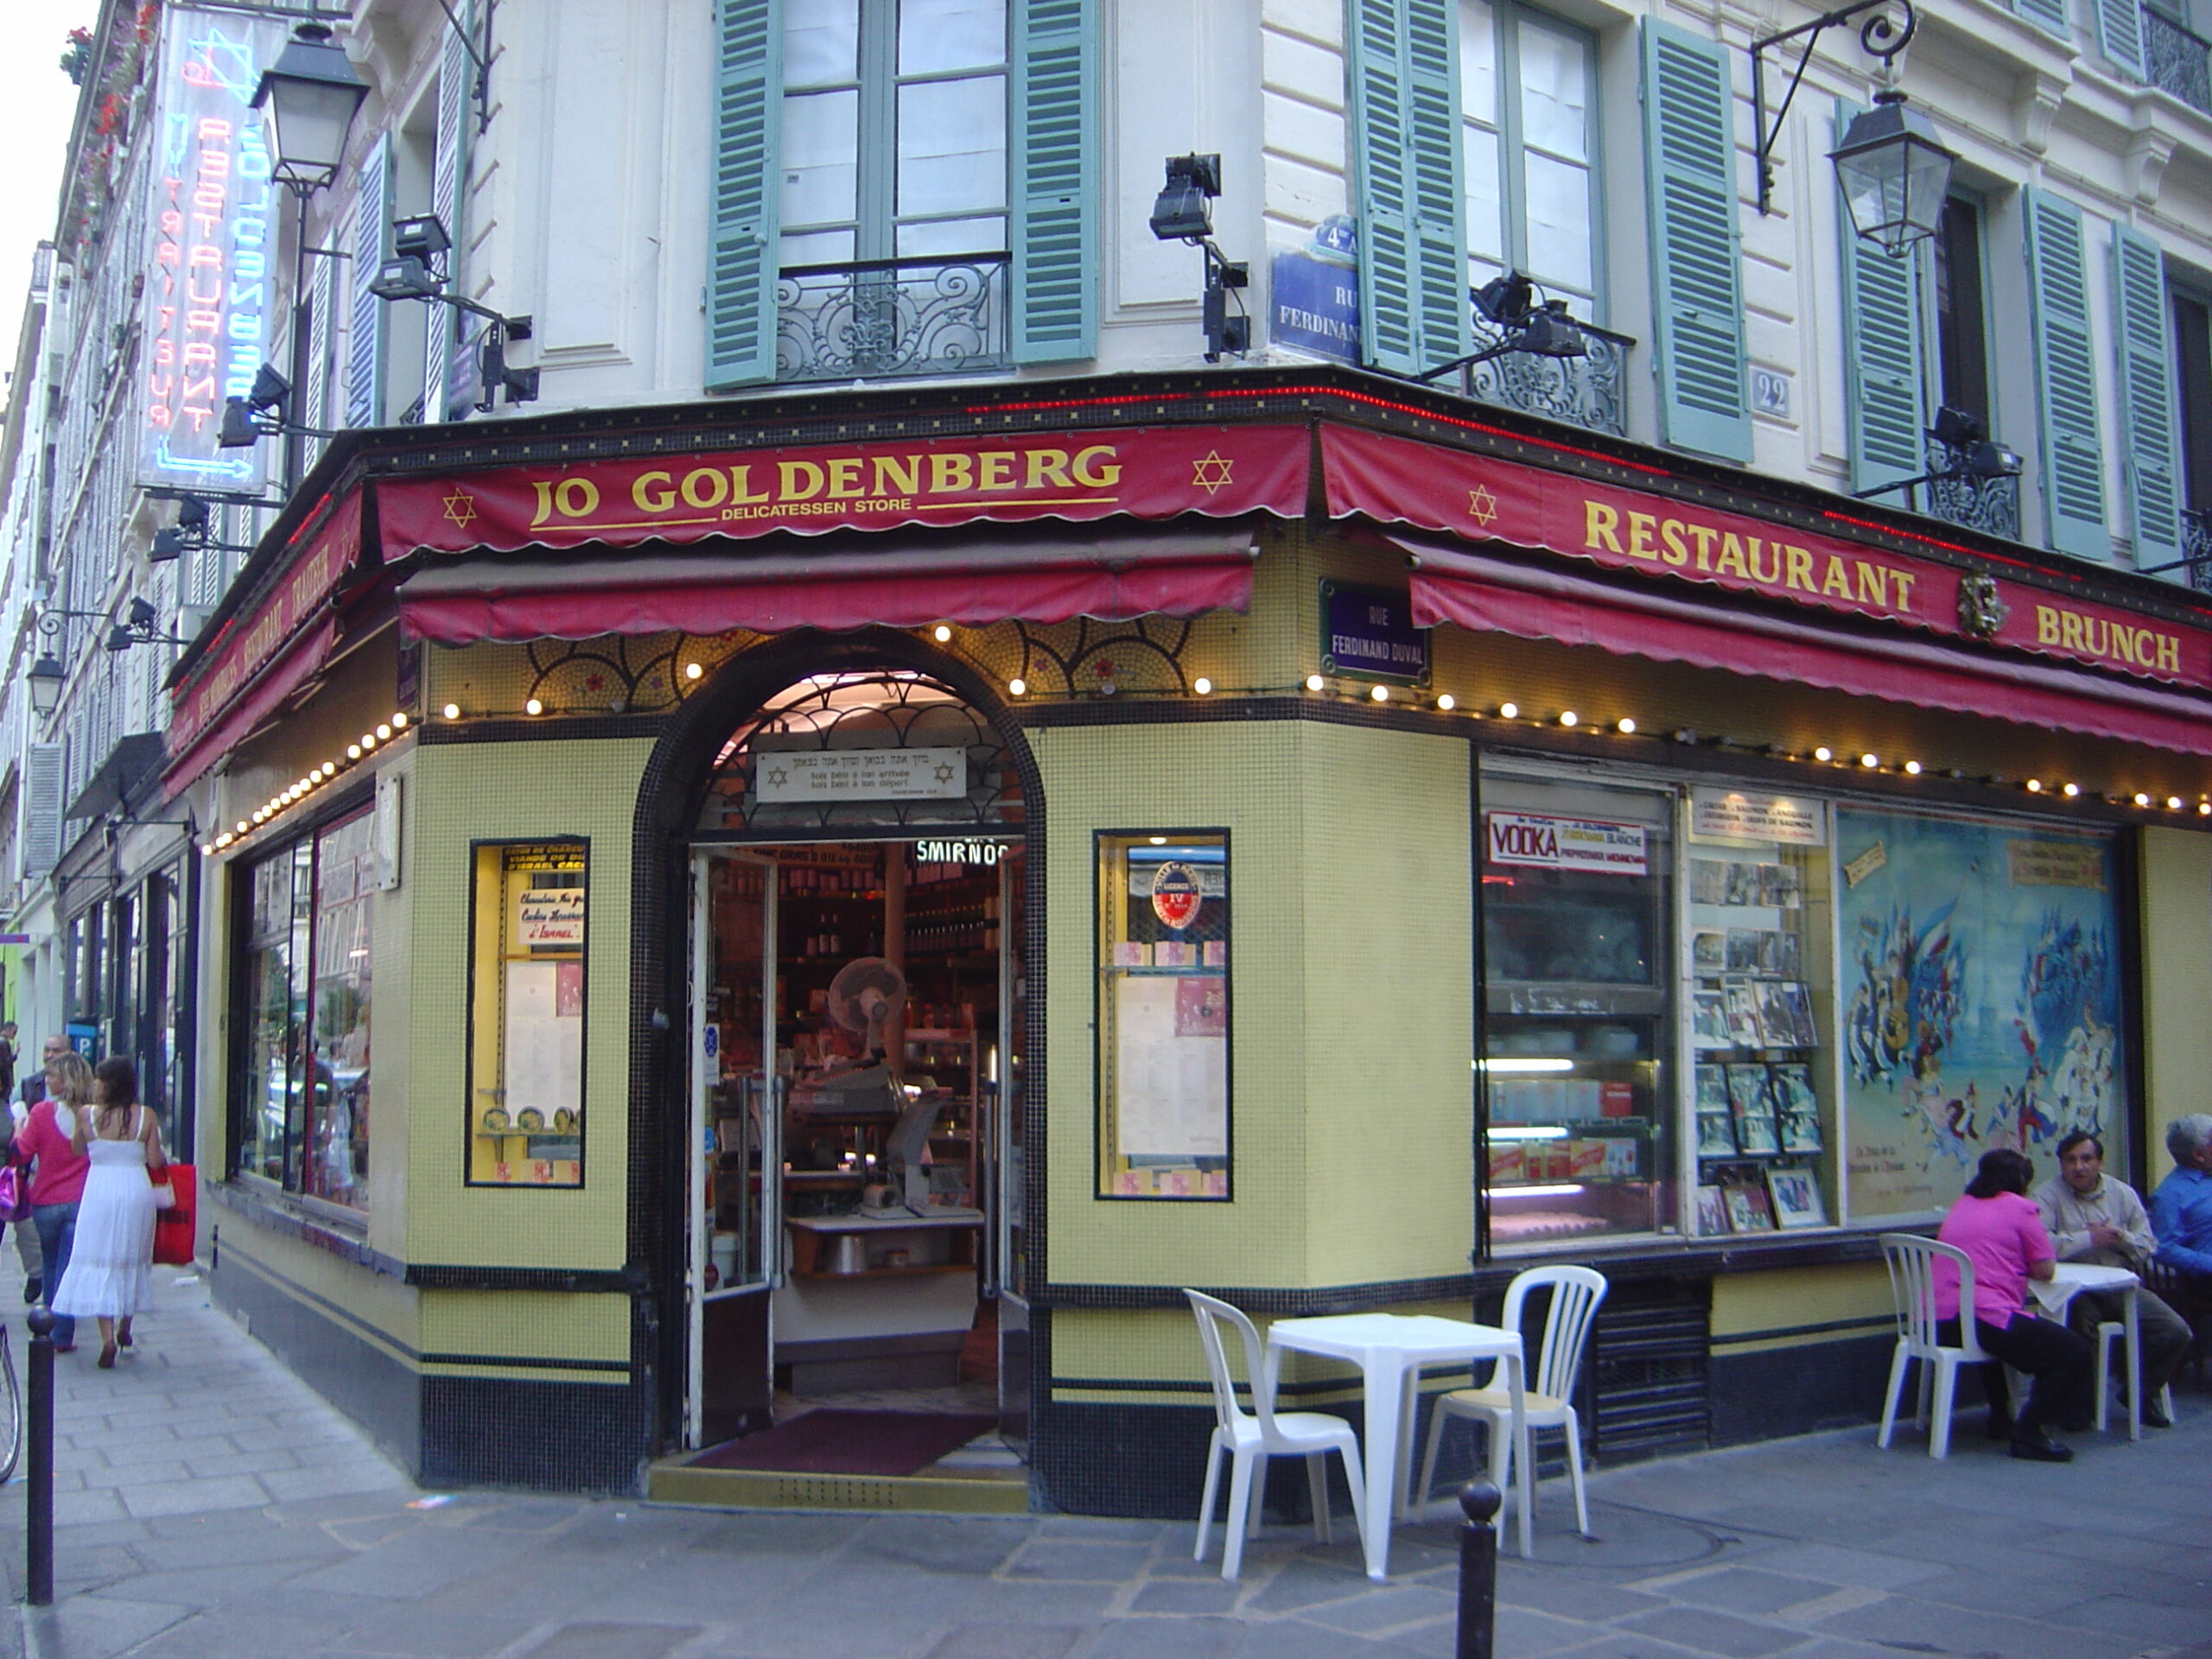 Palestinian Terrorists Attack Jewish Restaurant in Paris